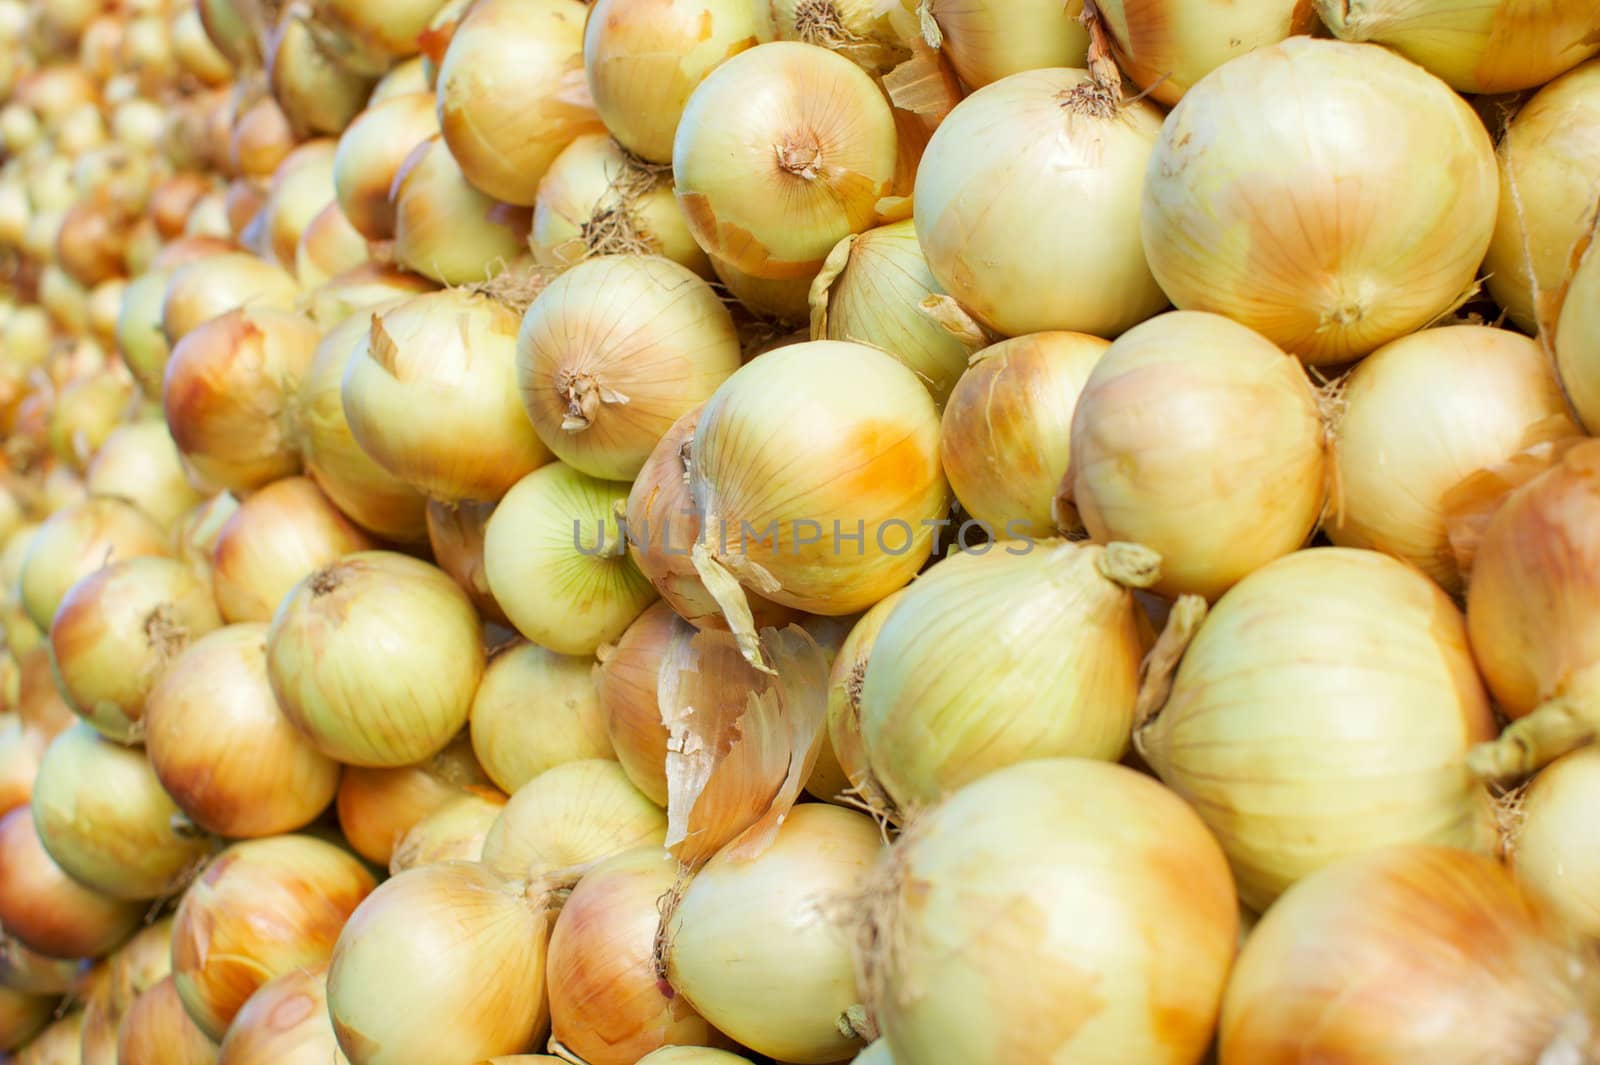 Farmers Market Yellow Onions b by bobkeenan